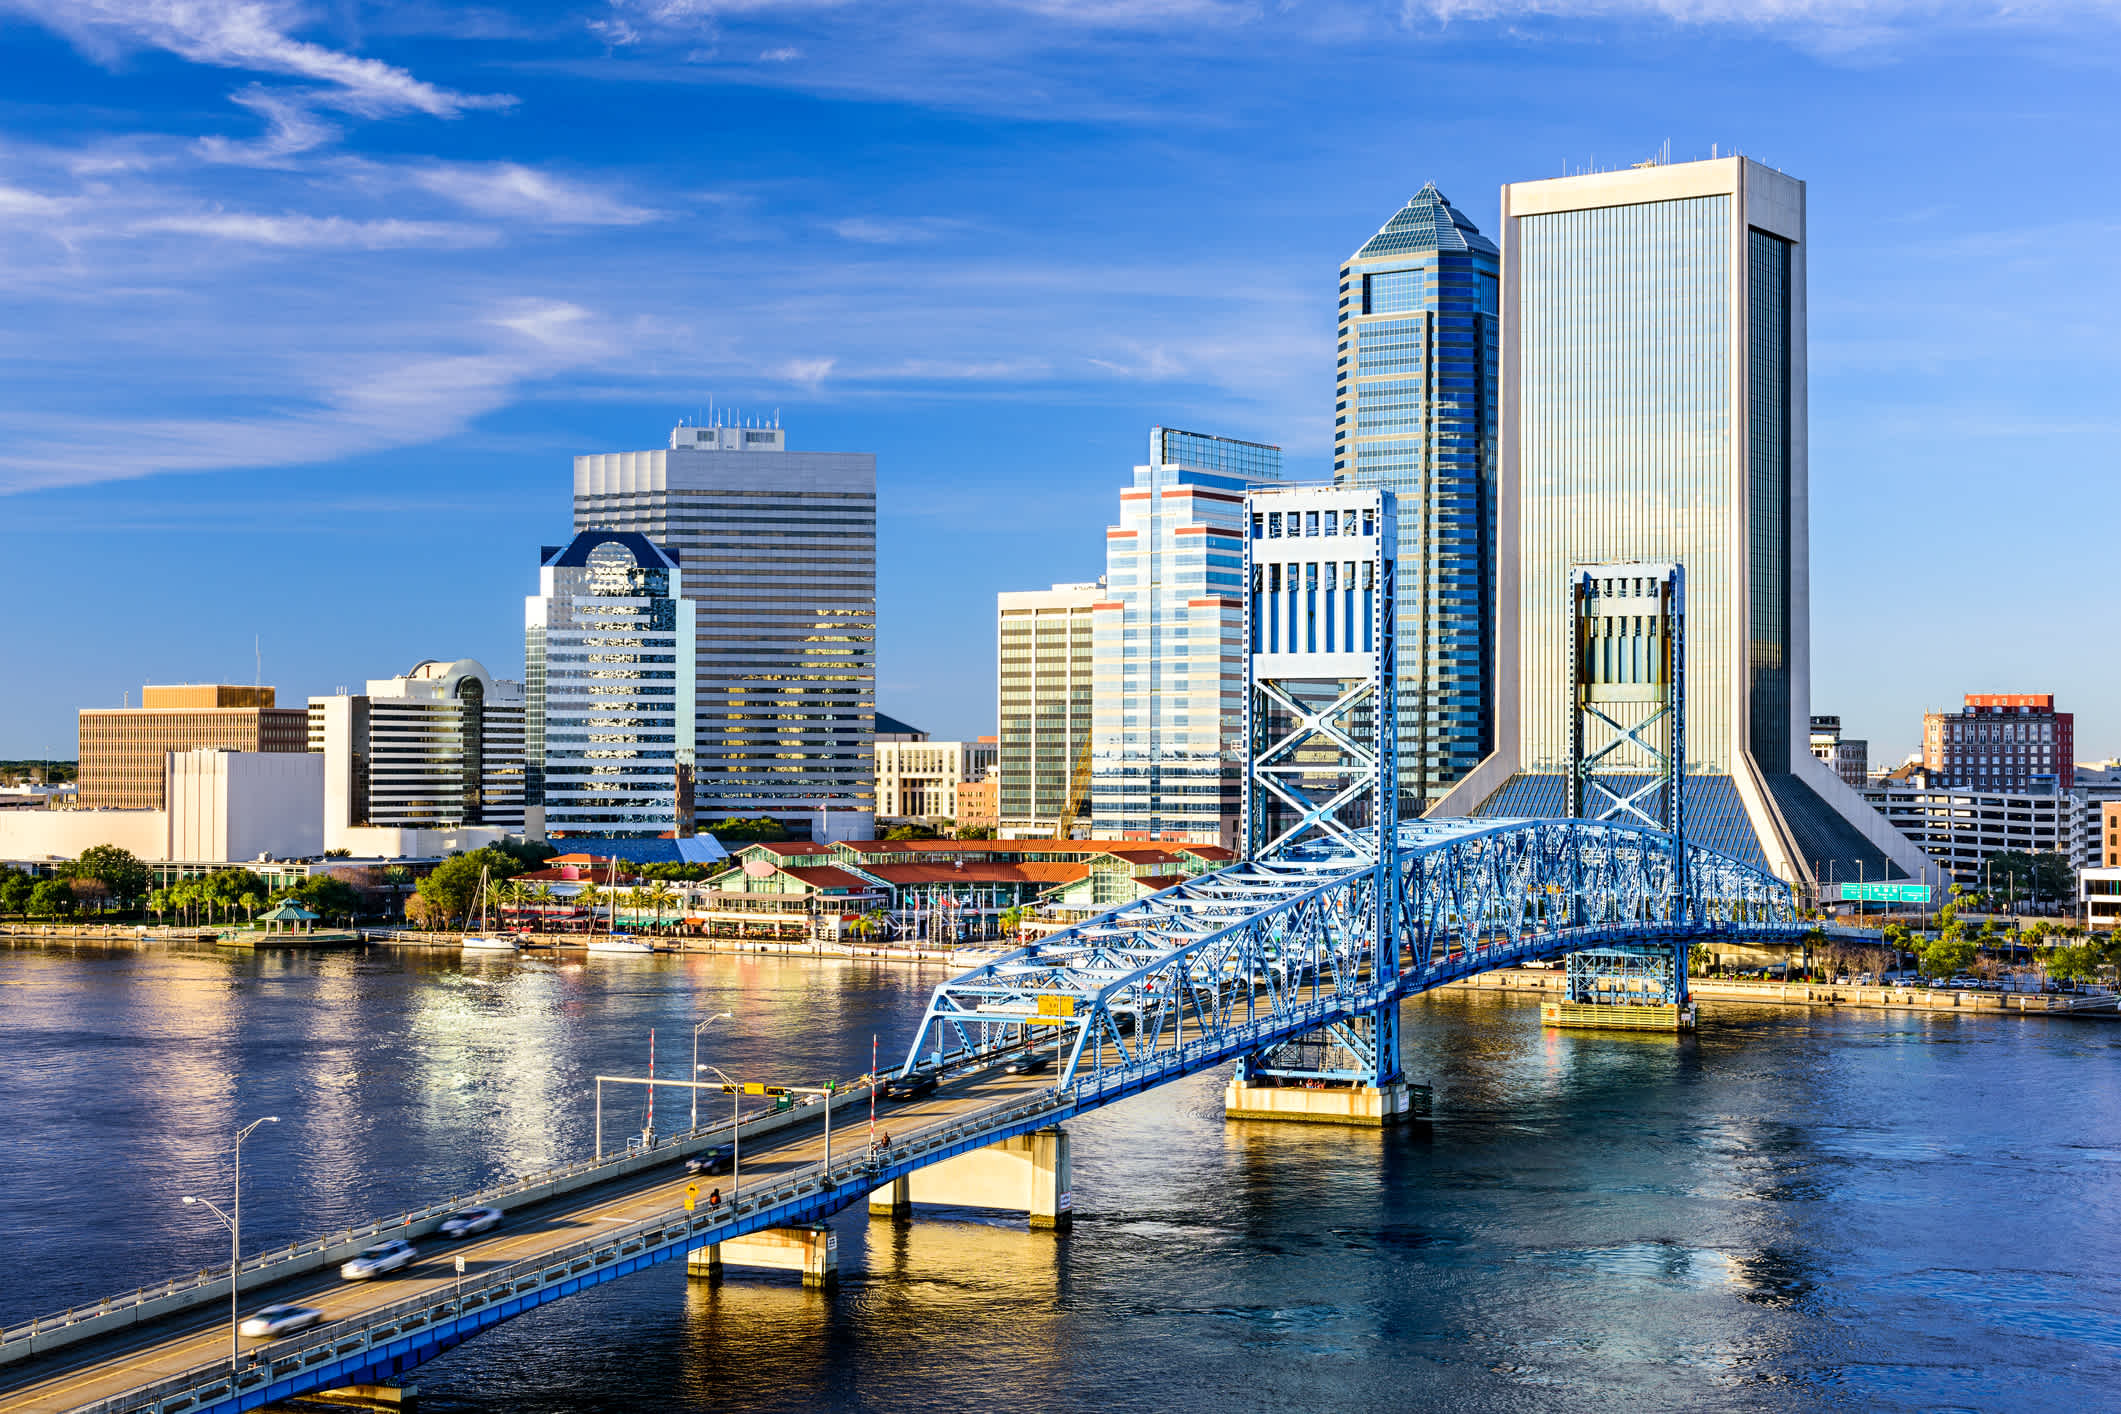 Skyline of Jacksonville in Florida.